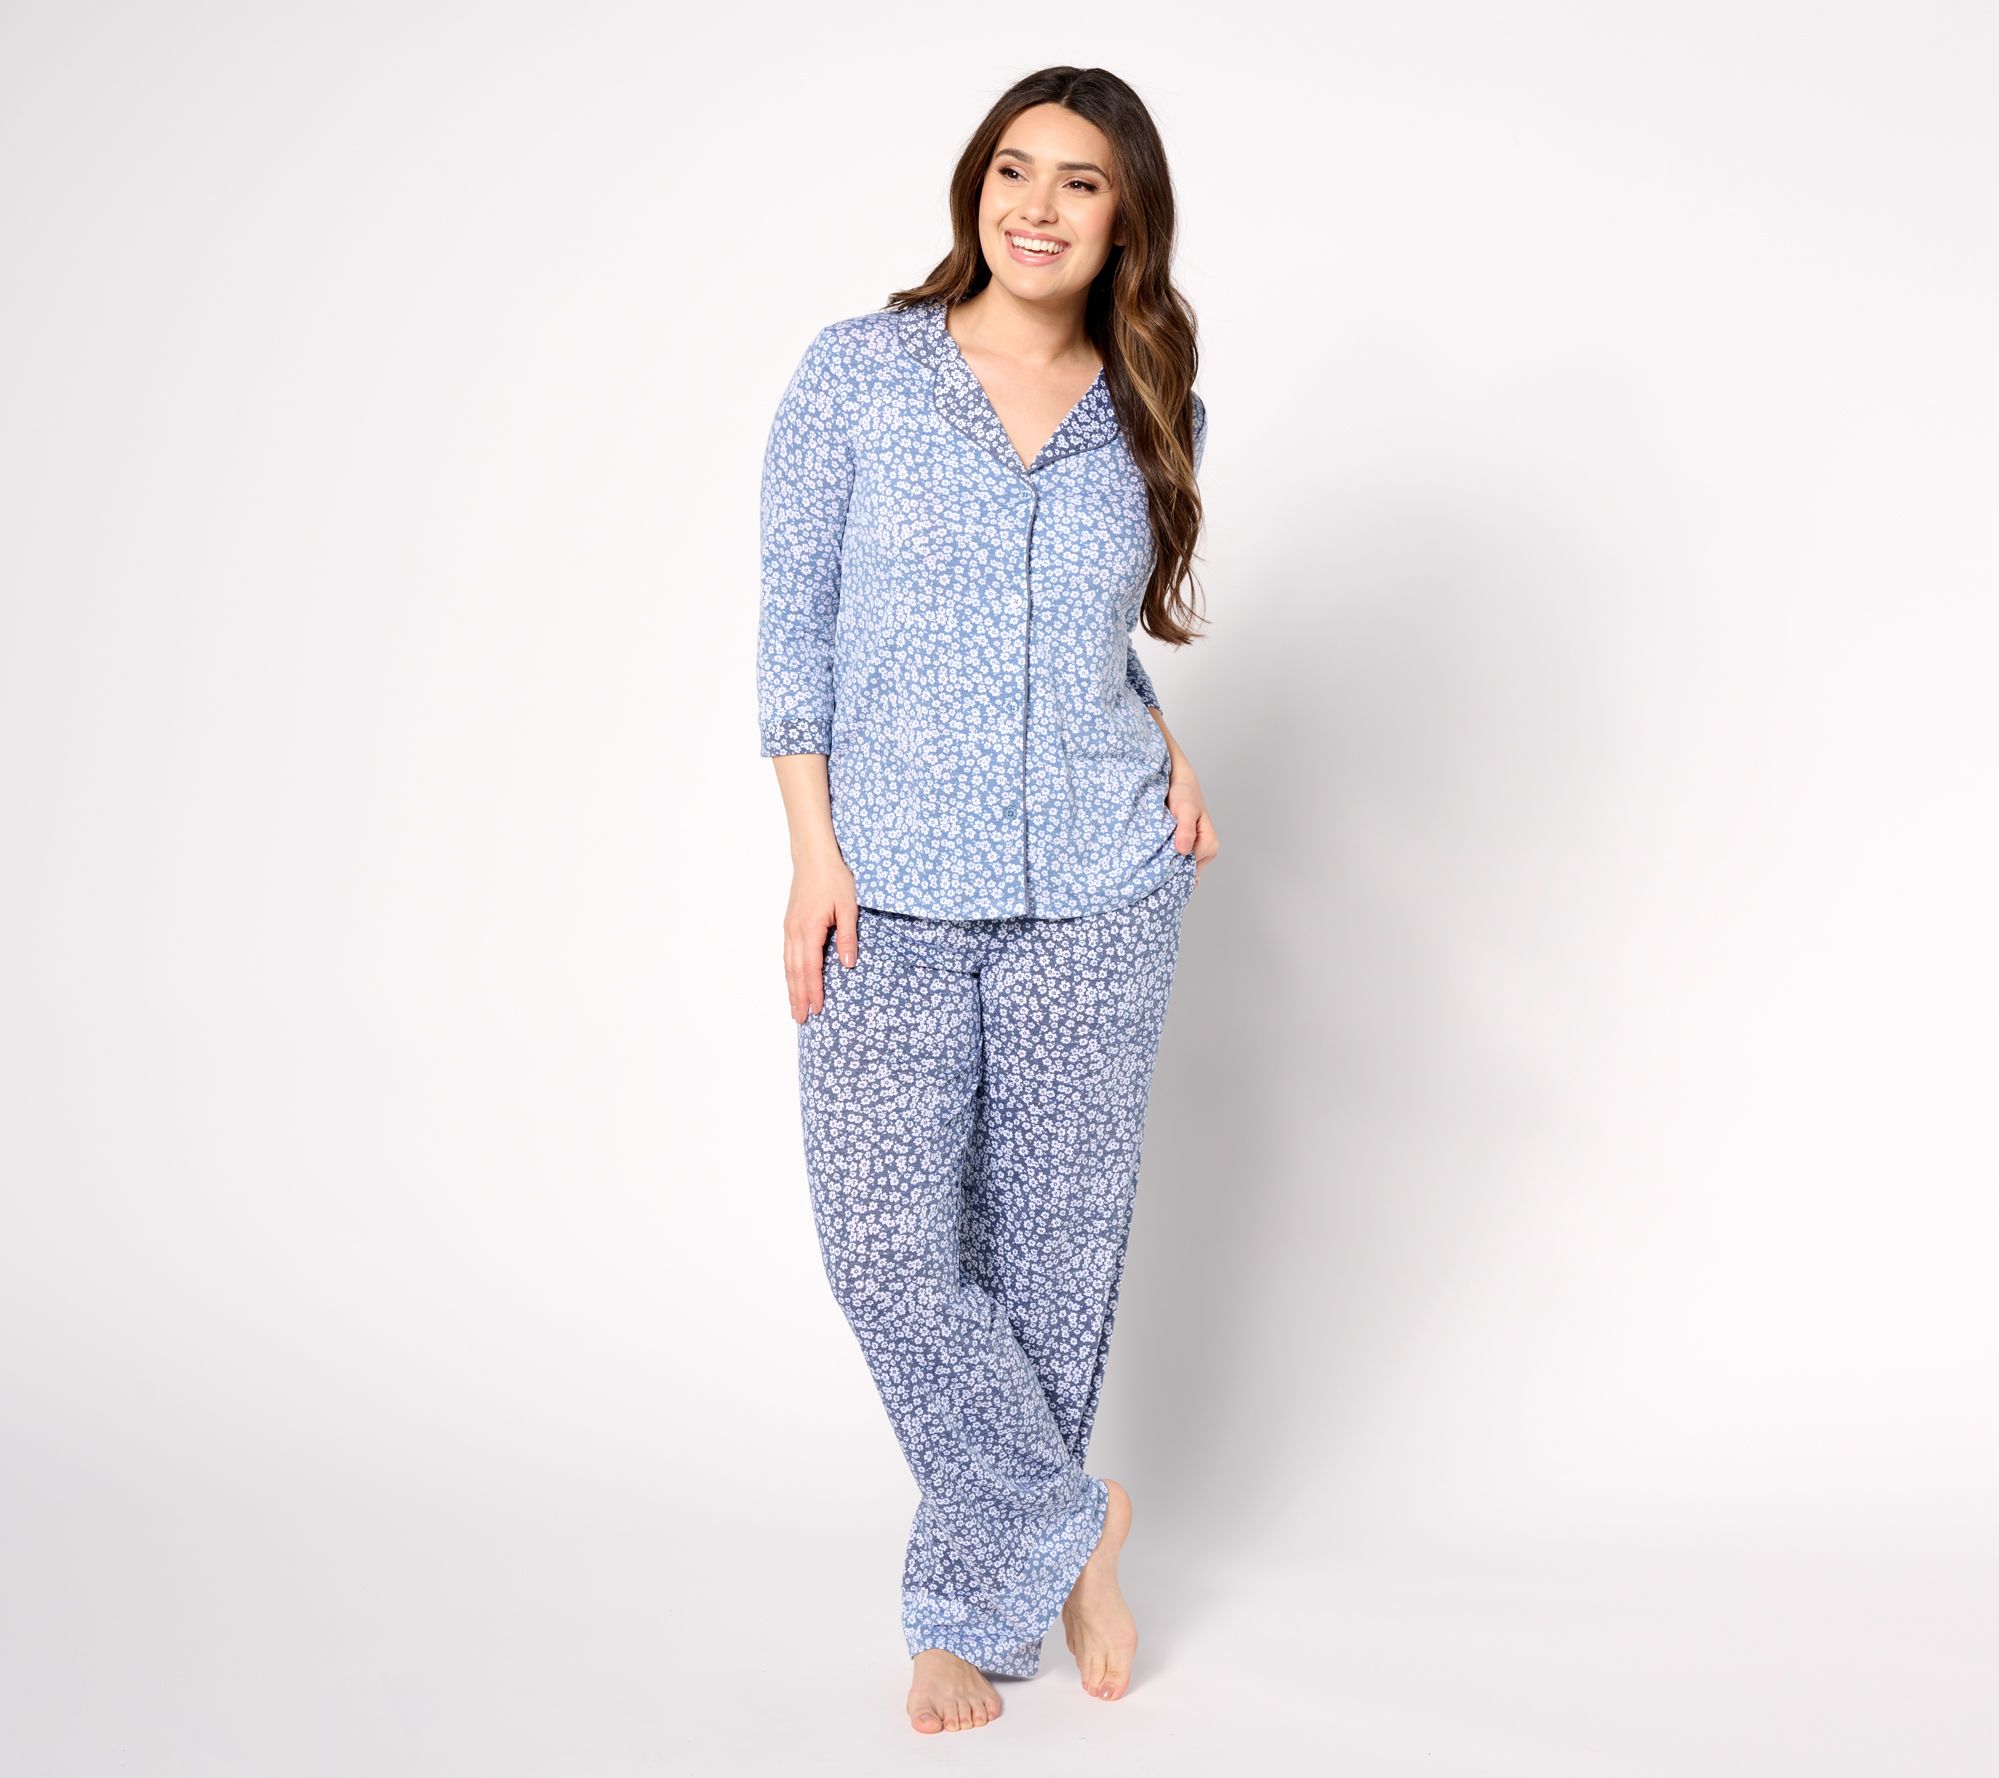 Misses X-Large (18-20) - Pajamas 